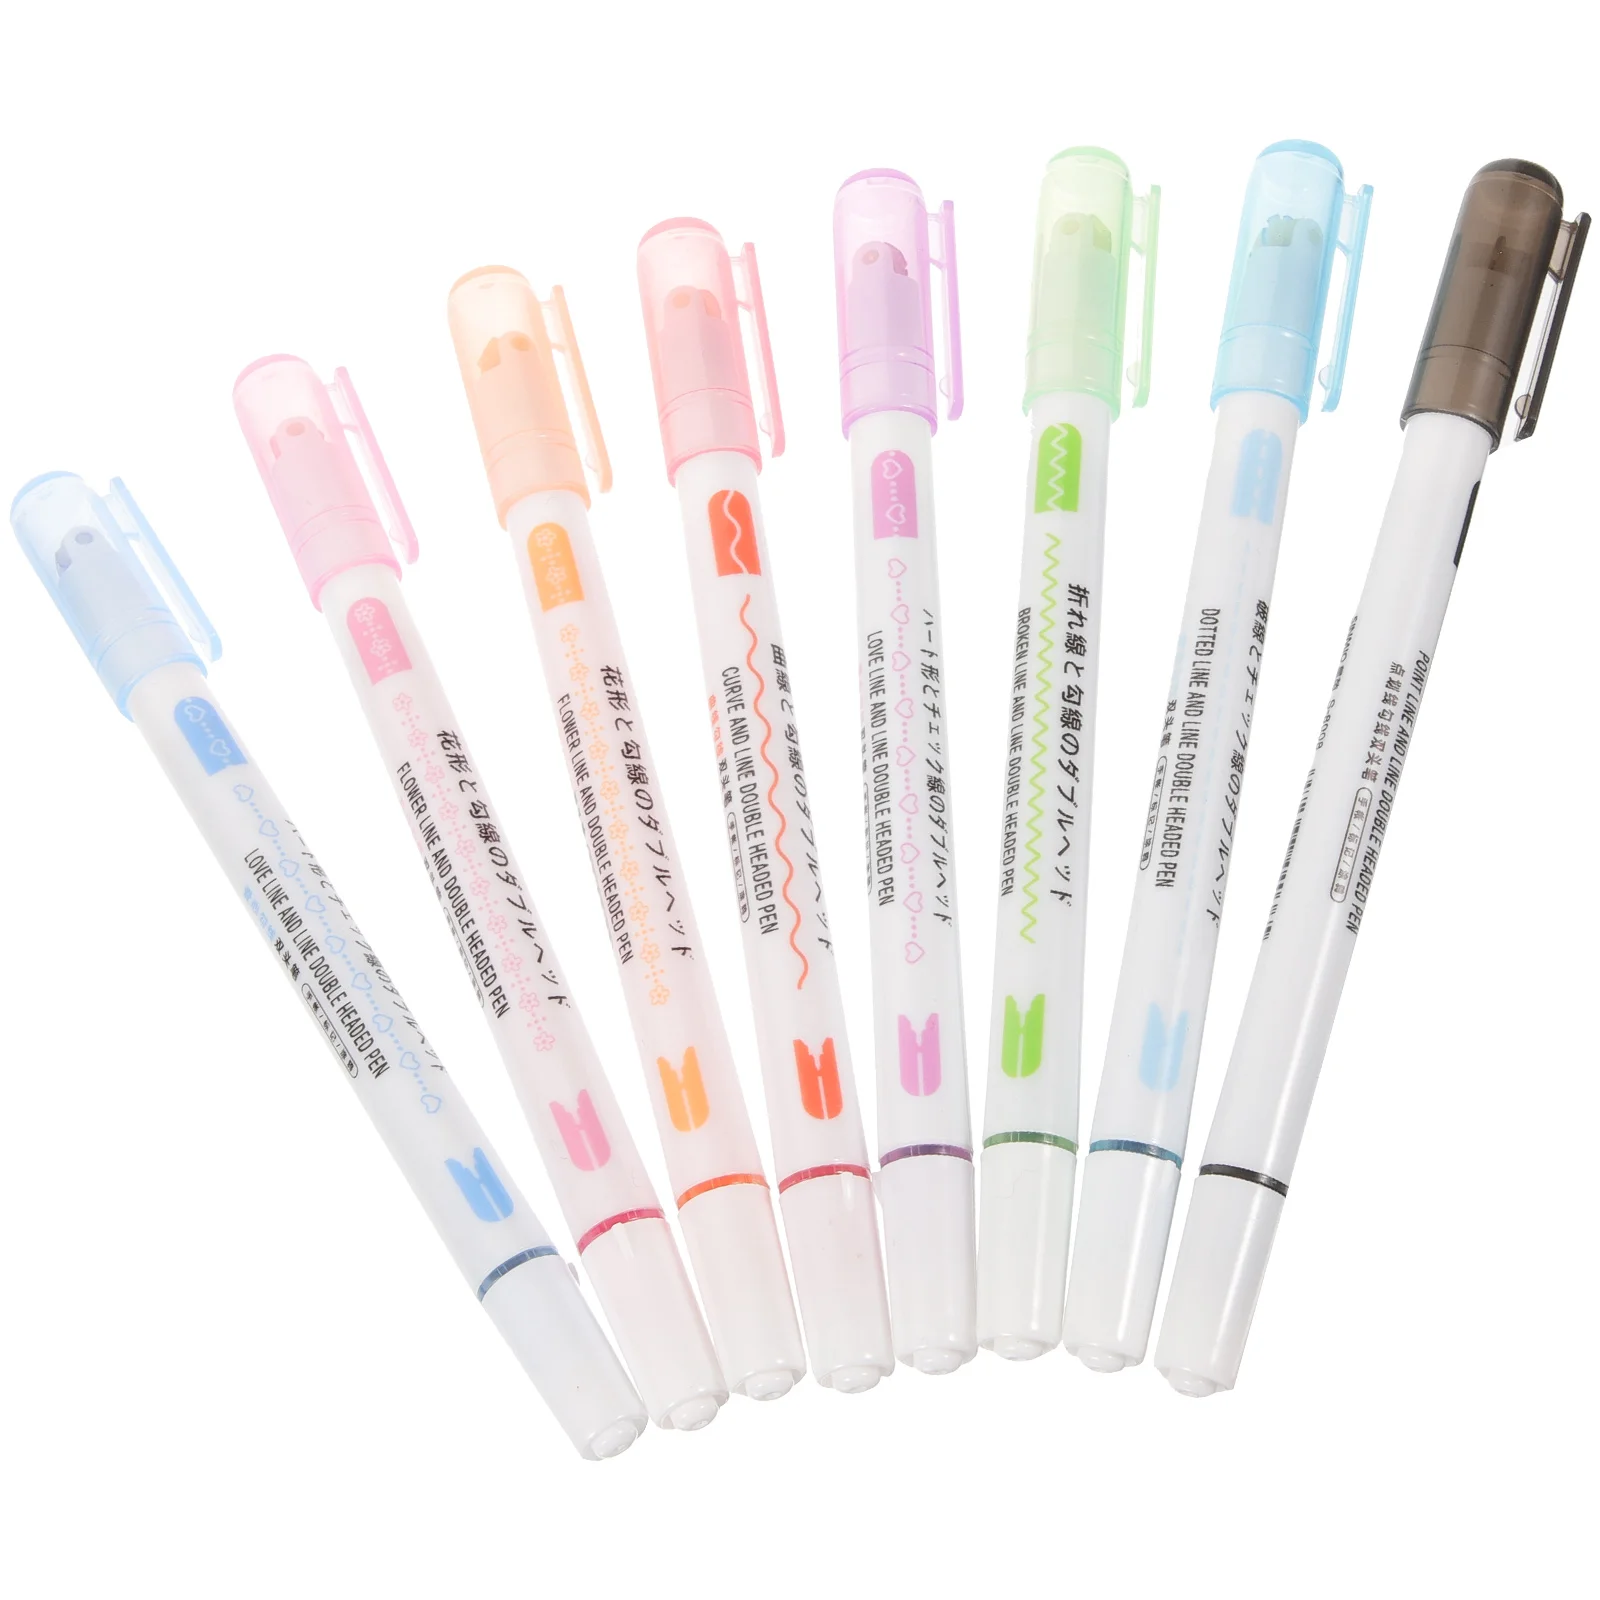 

8 Pcs Highlighters Double Ended Marker Pen Creative Curve Contour Household Pens Color Scrapbook Plastic Accessory Student